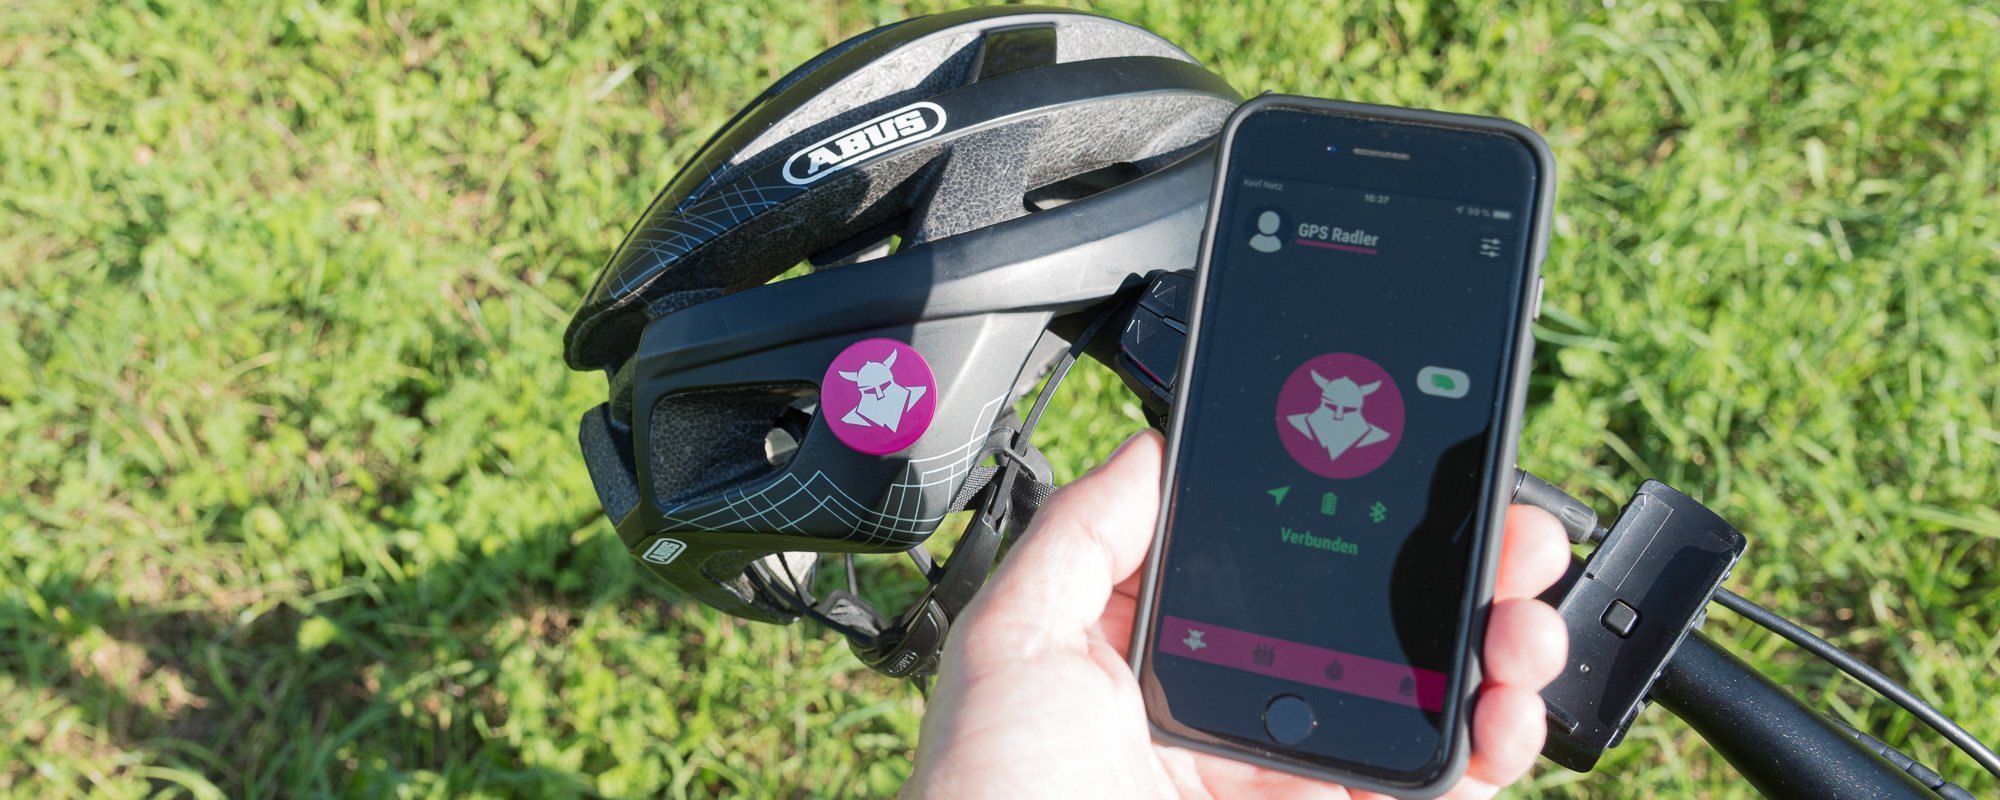 Notruf App neu Tocsen GPS Sturzhelmsensor für Helme Reitsport Fahrrad usw 